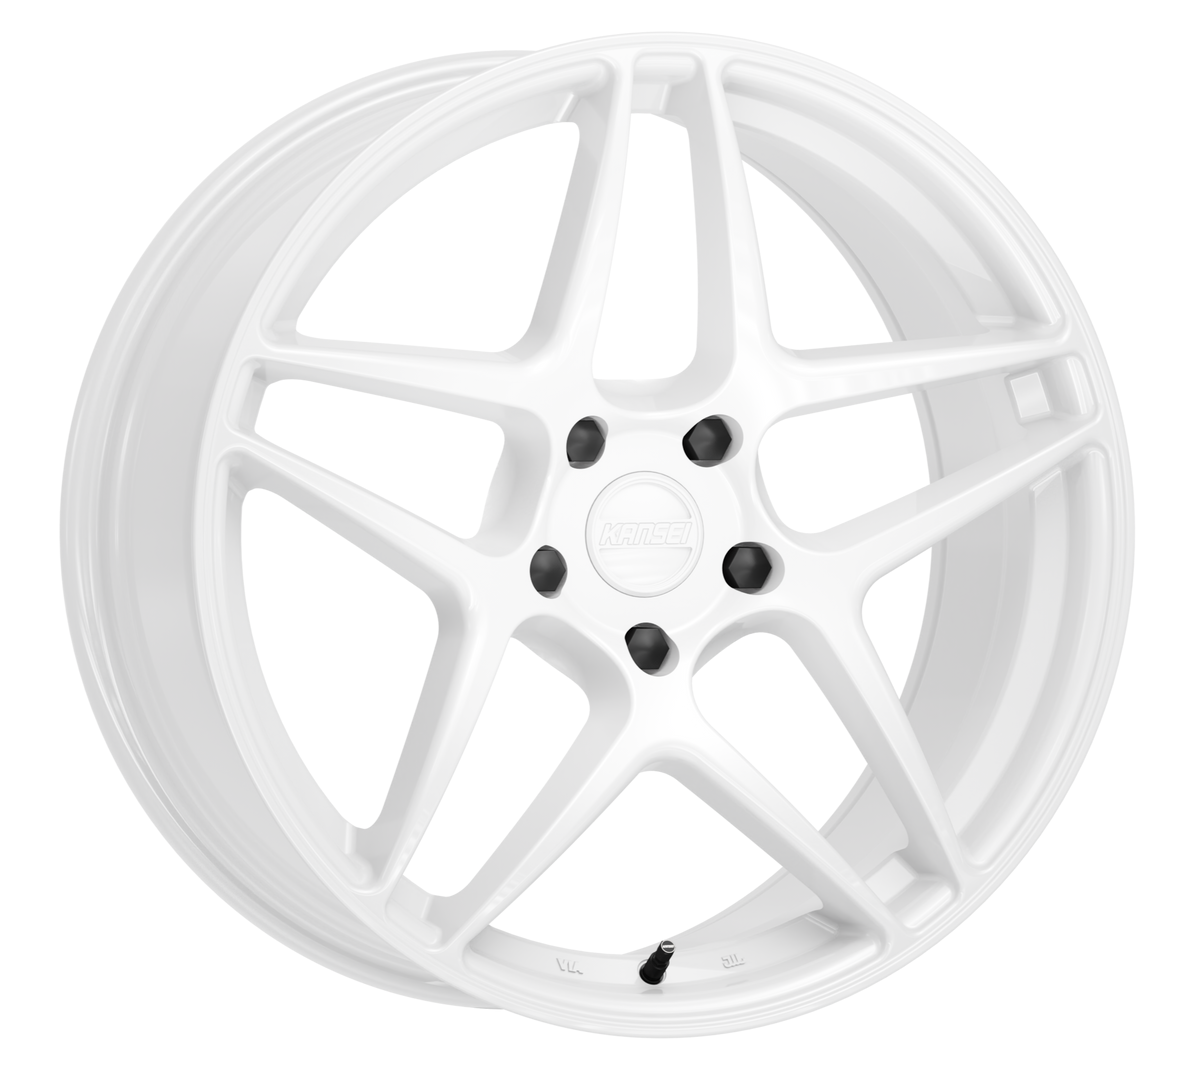 K15W ASTRO Wheel, Size: 19" x 9.50", Bolt Pattern: 5 x 112 mm, Backspace: 5.72" [Finish: Gloss White]